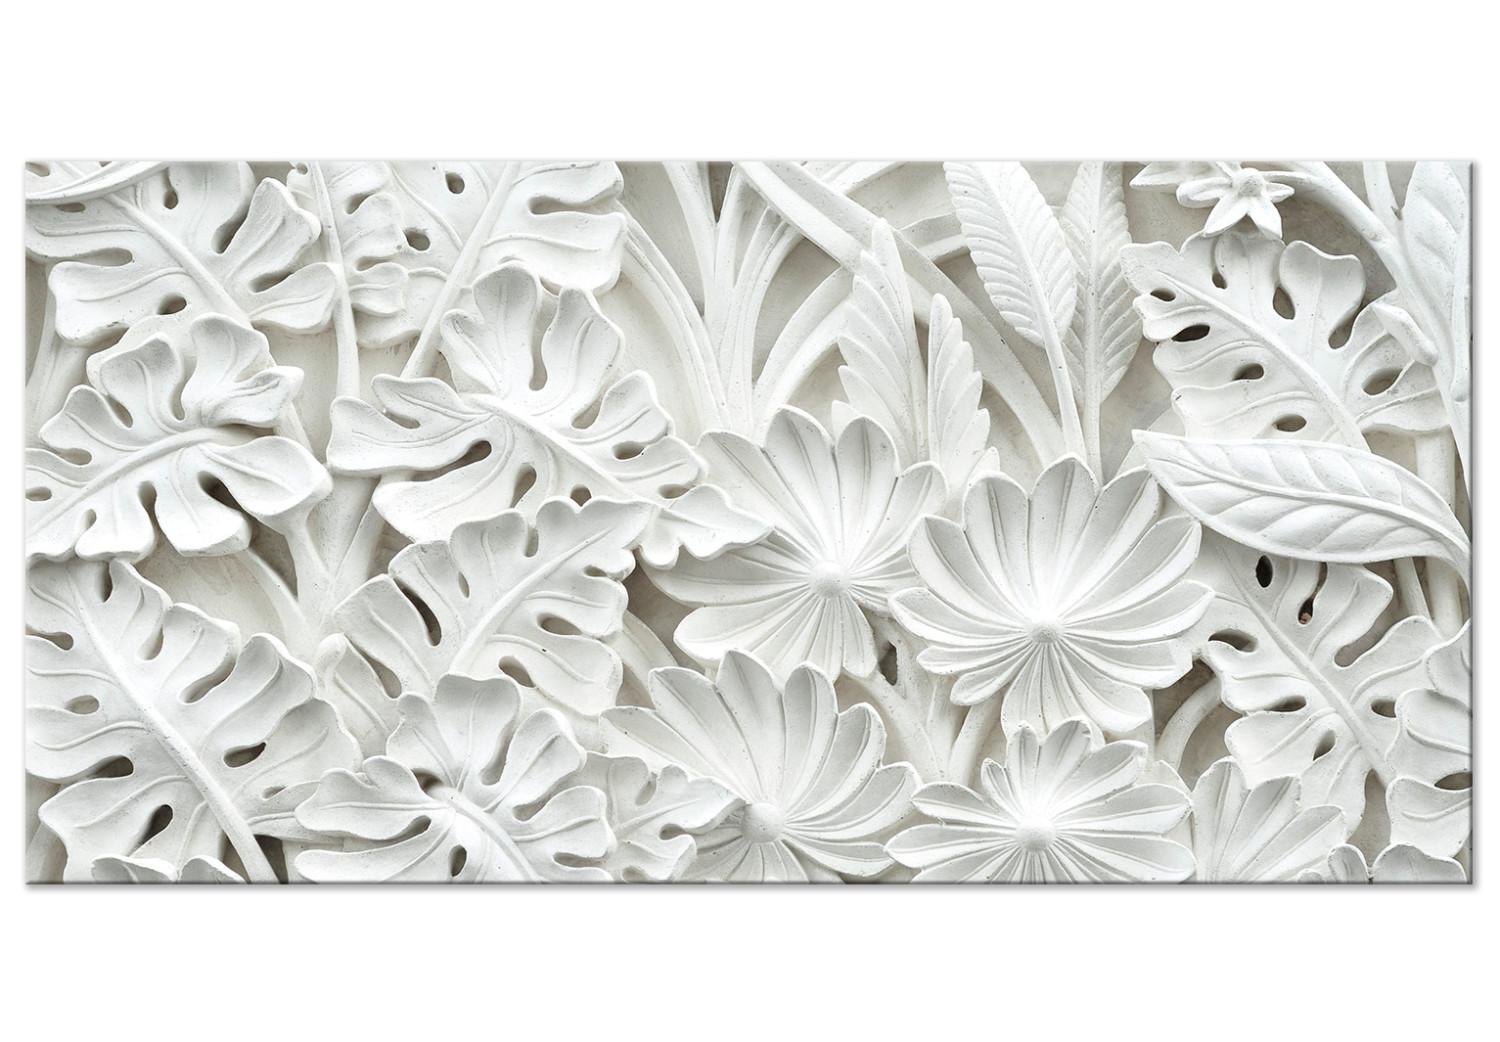 Canvas Alabaster Garden (1-part) - white ornament in plant motif